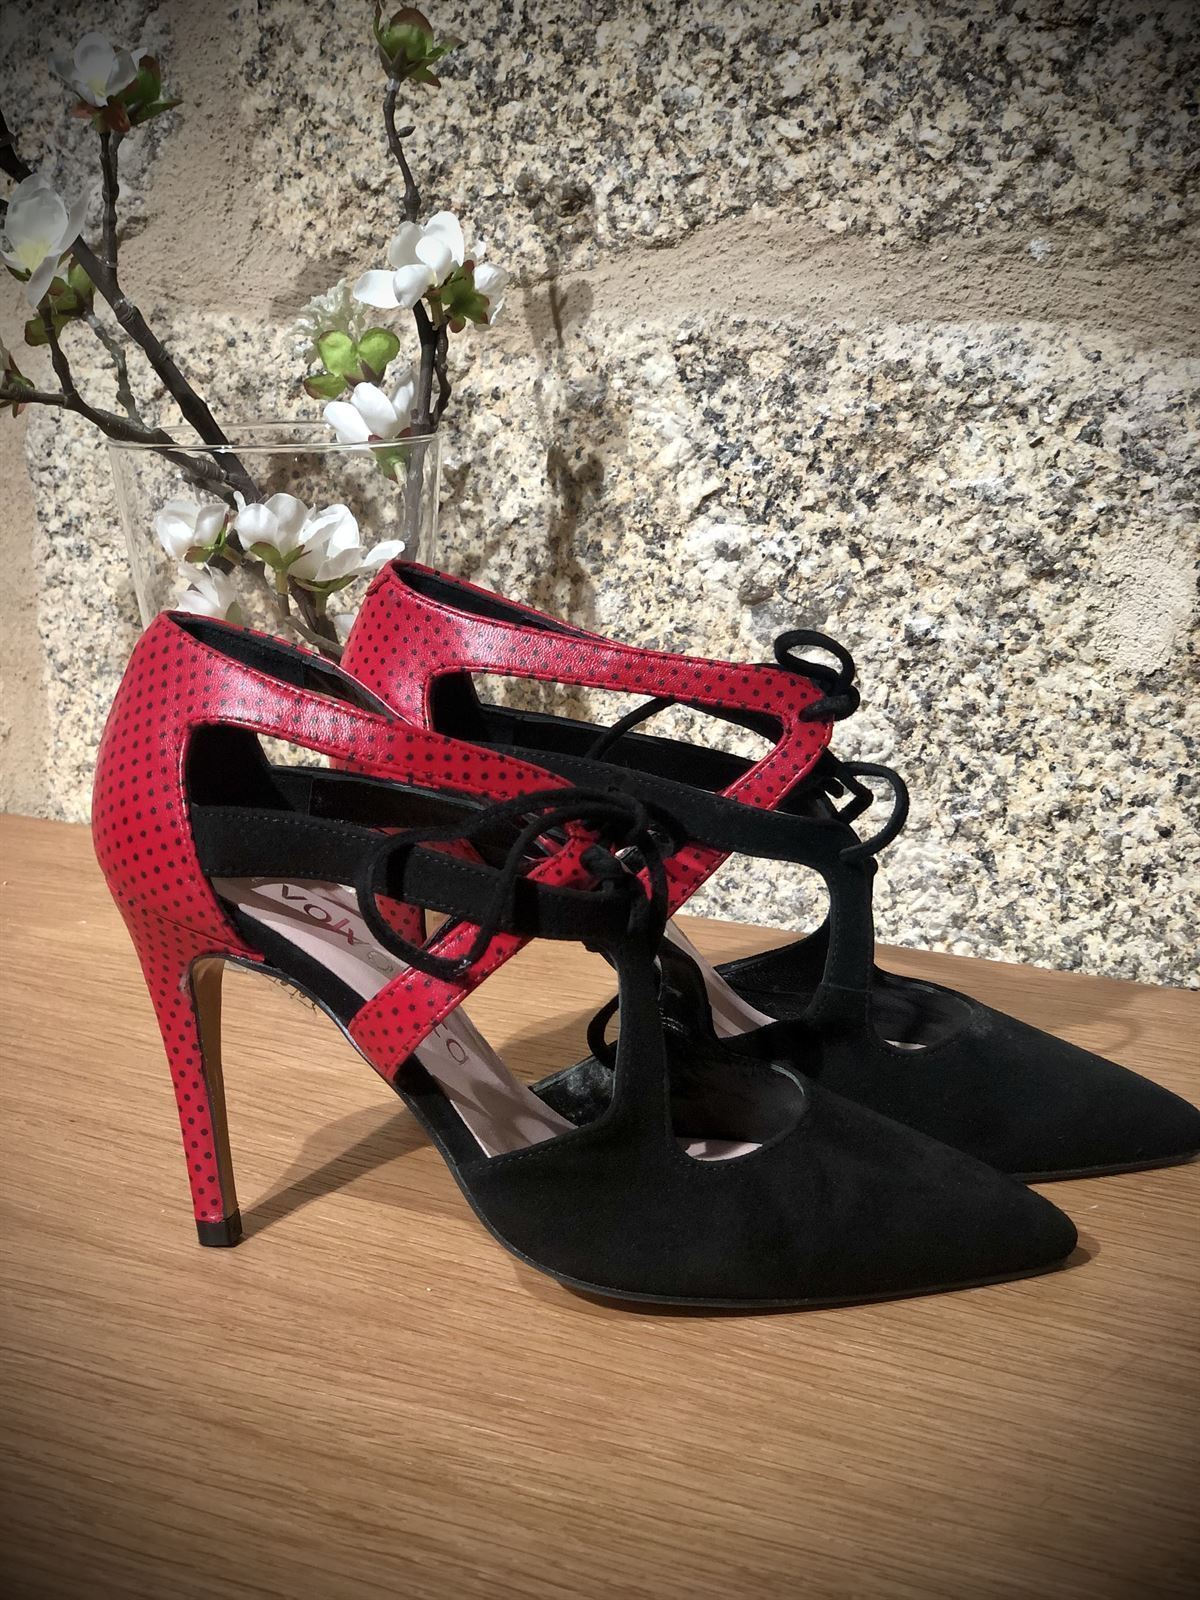 Zapato angari cordones negro rojo - Imagen 1